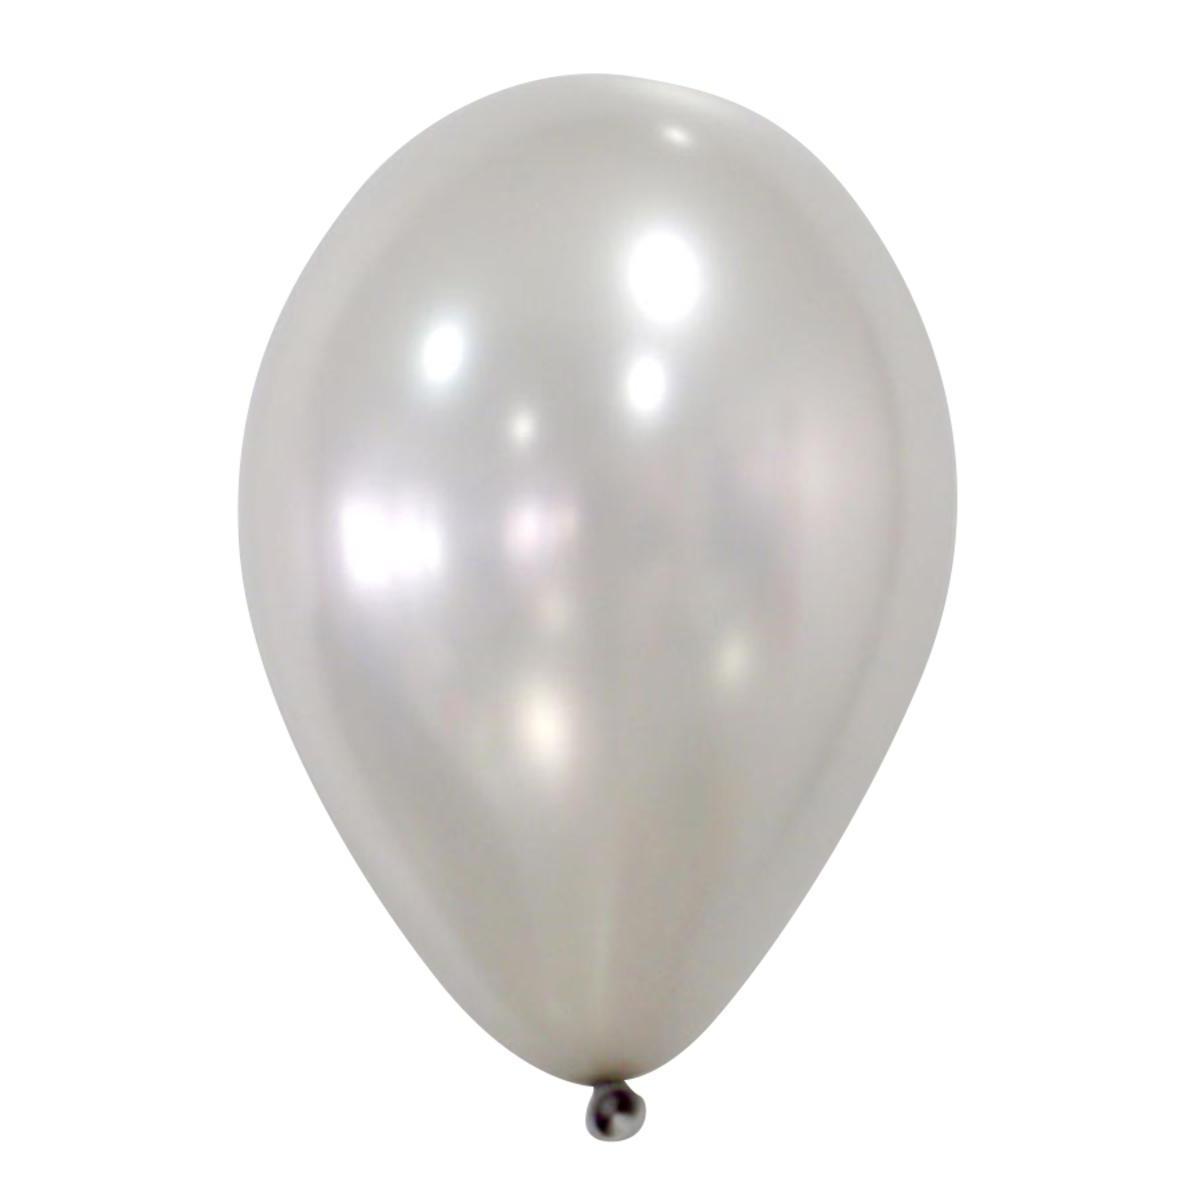 24 ballons nacrés - 30 cm - Latex - Argent